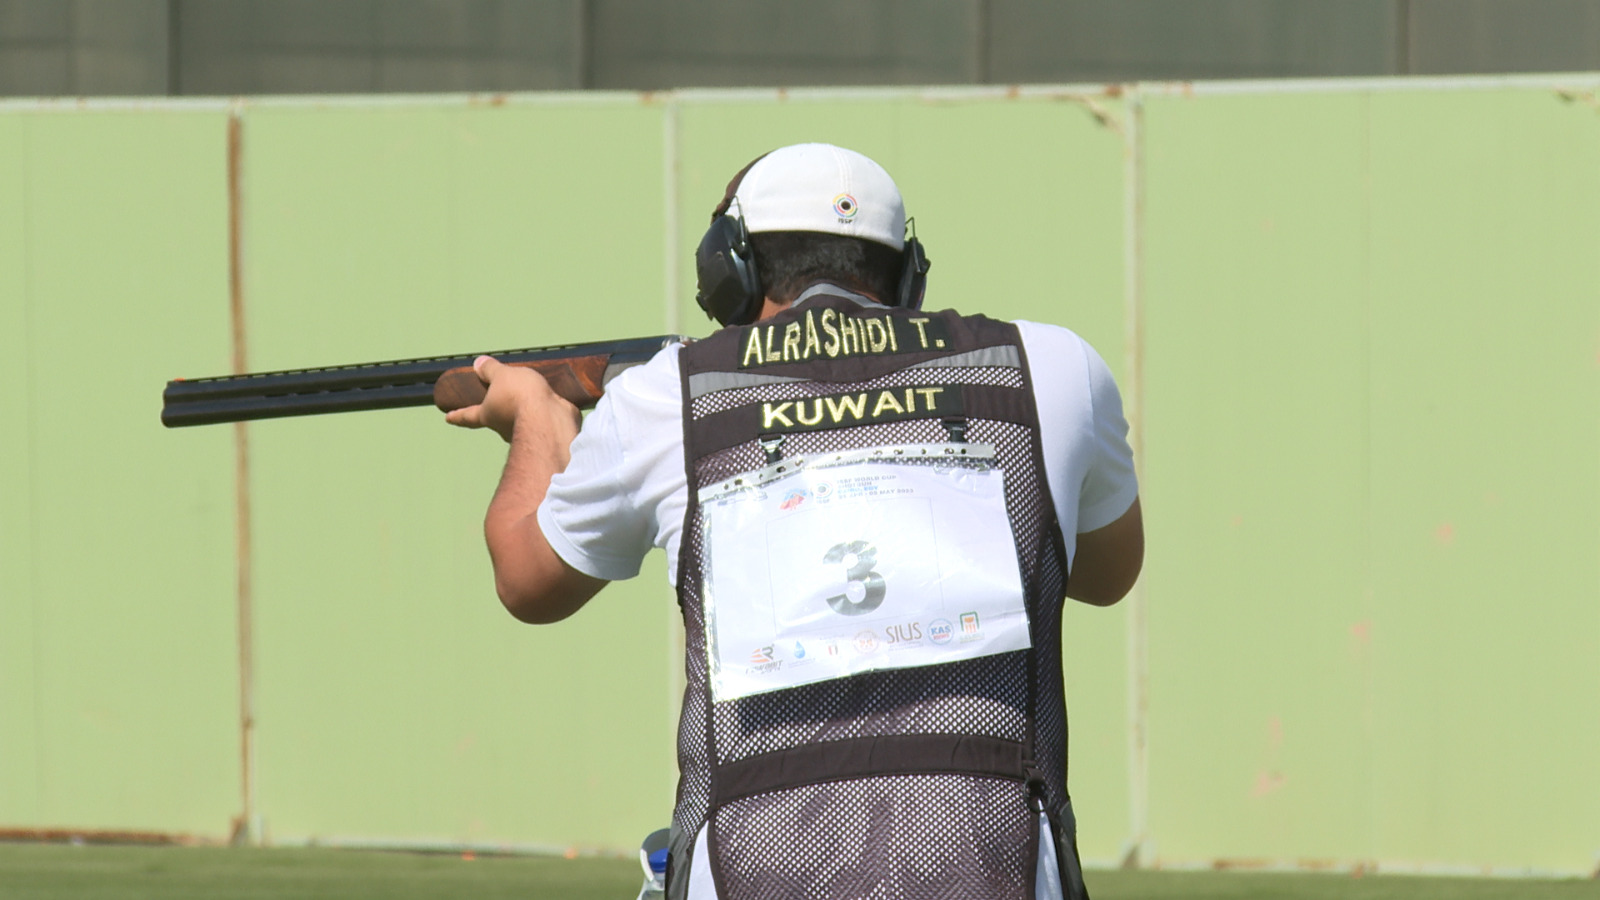 Kuwaiti shooter Talal Al-Rashidi	